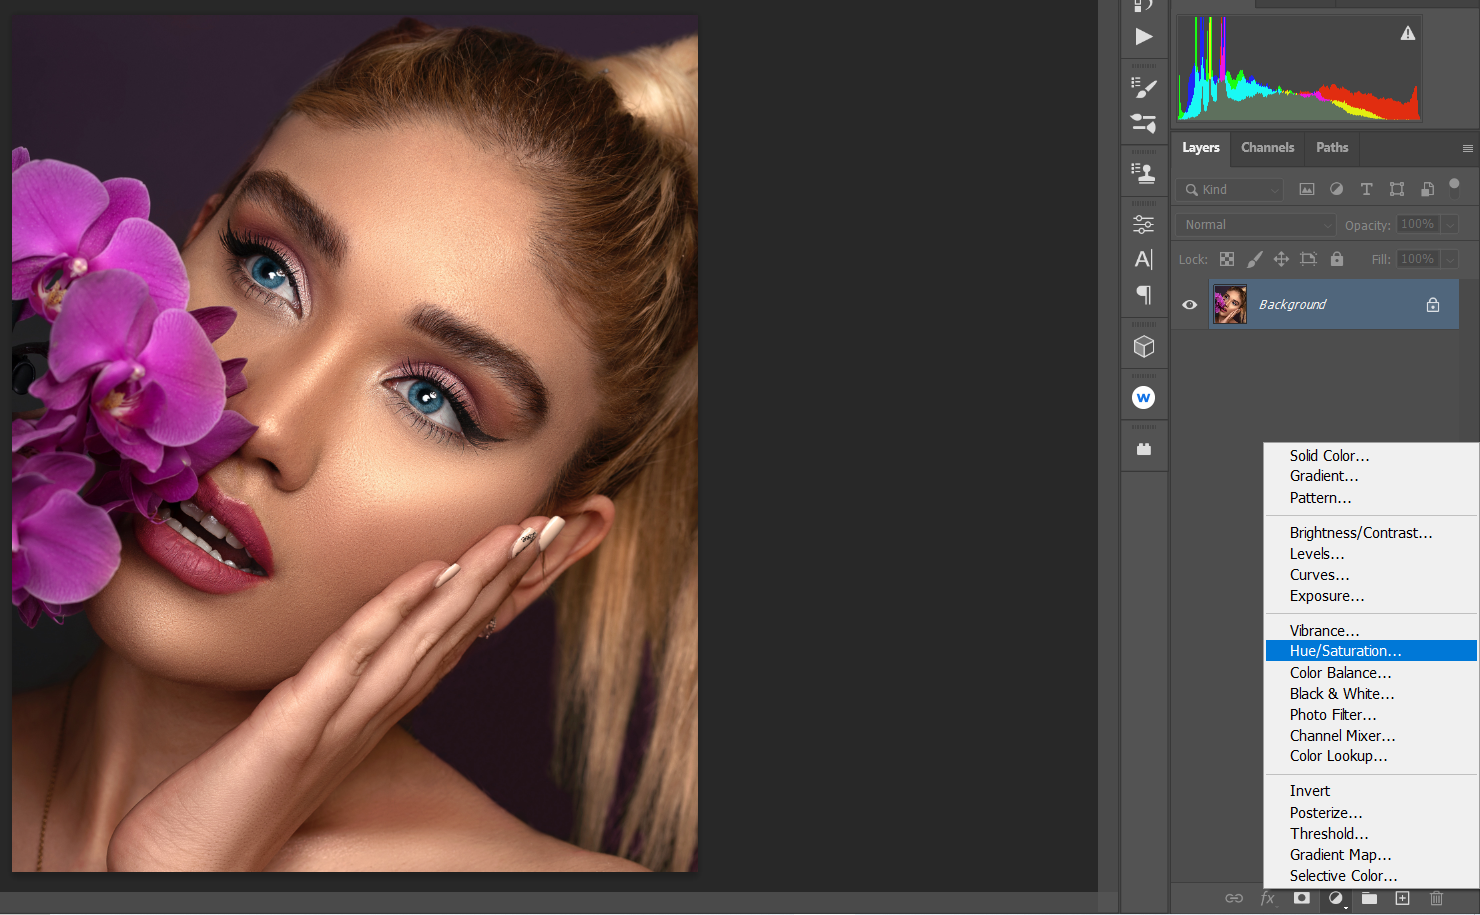 Create a hue saturation layer portrait image